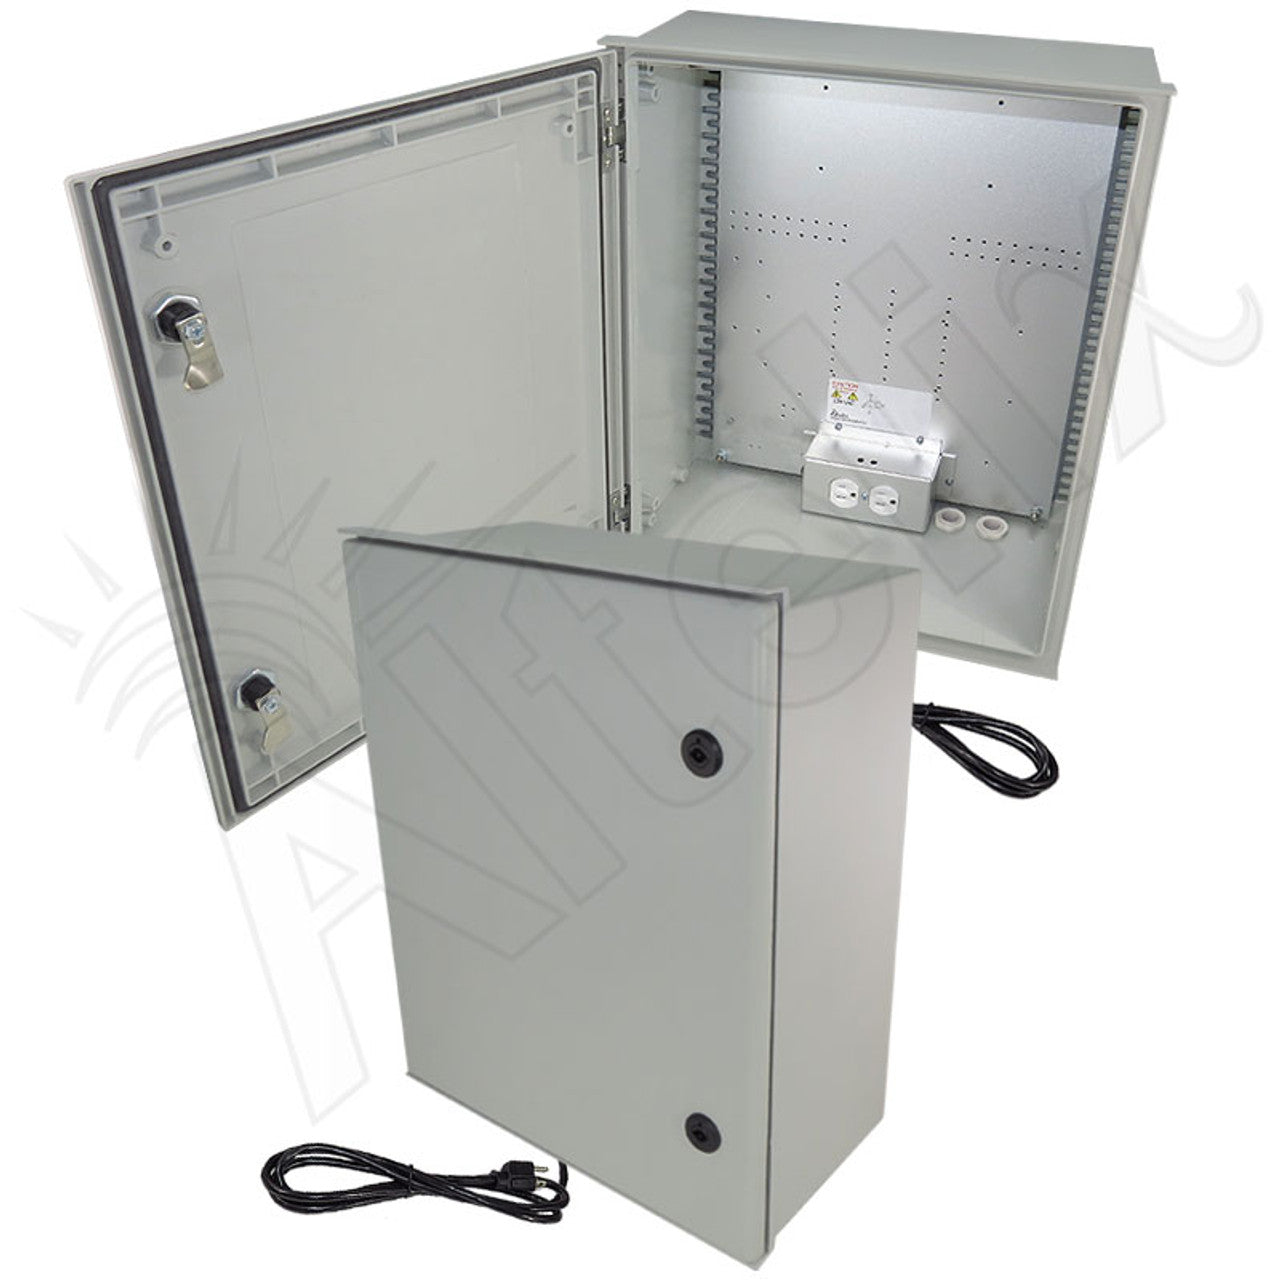 Altelix NEMA 3X Fiberglass Weatherproof Enclosure with Equipment Mounting Plate, 120 VAC Outlets & Power Cord-5